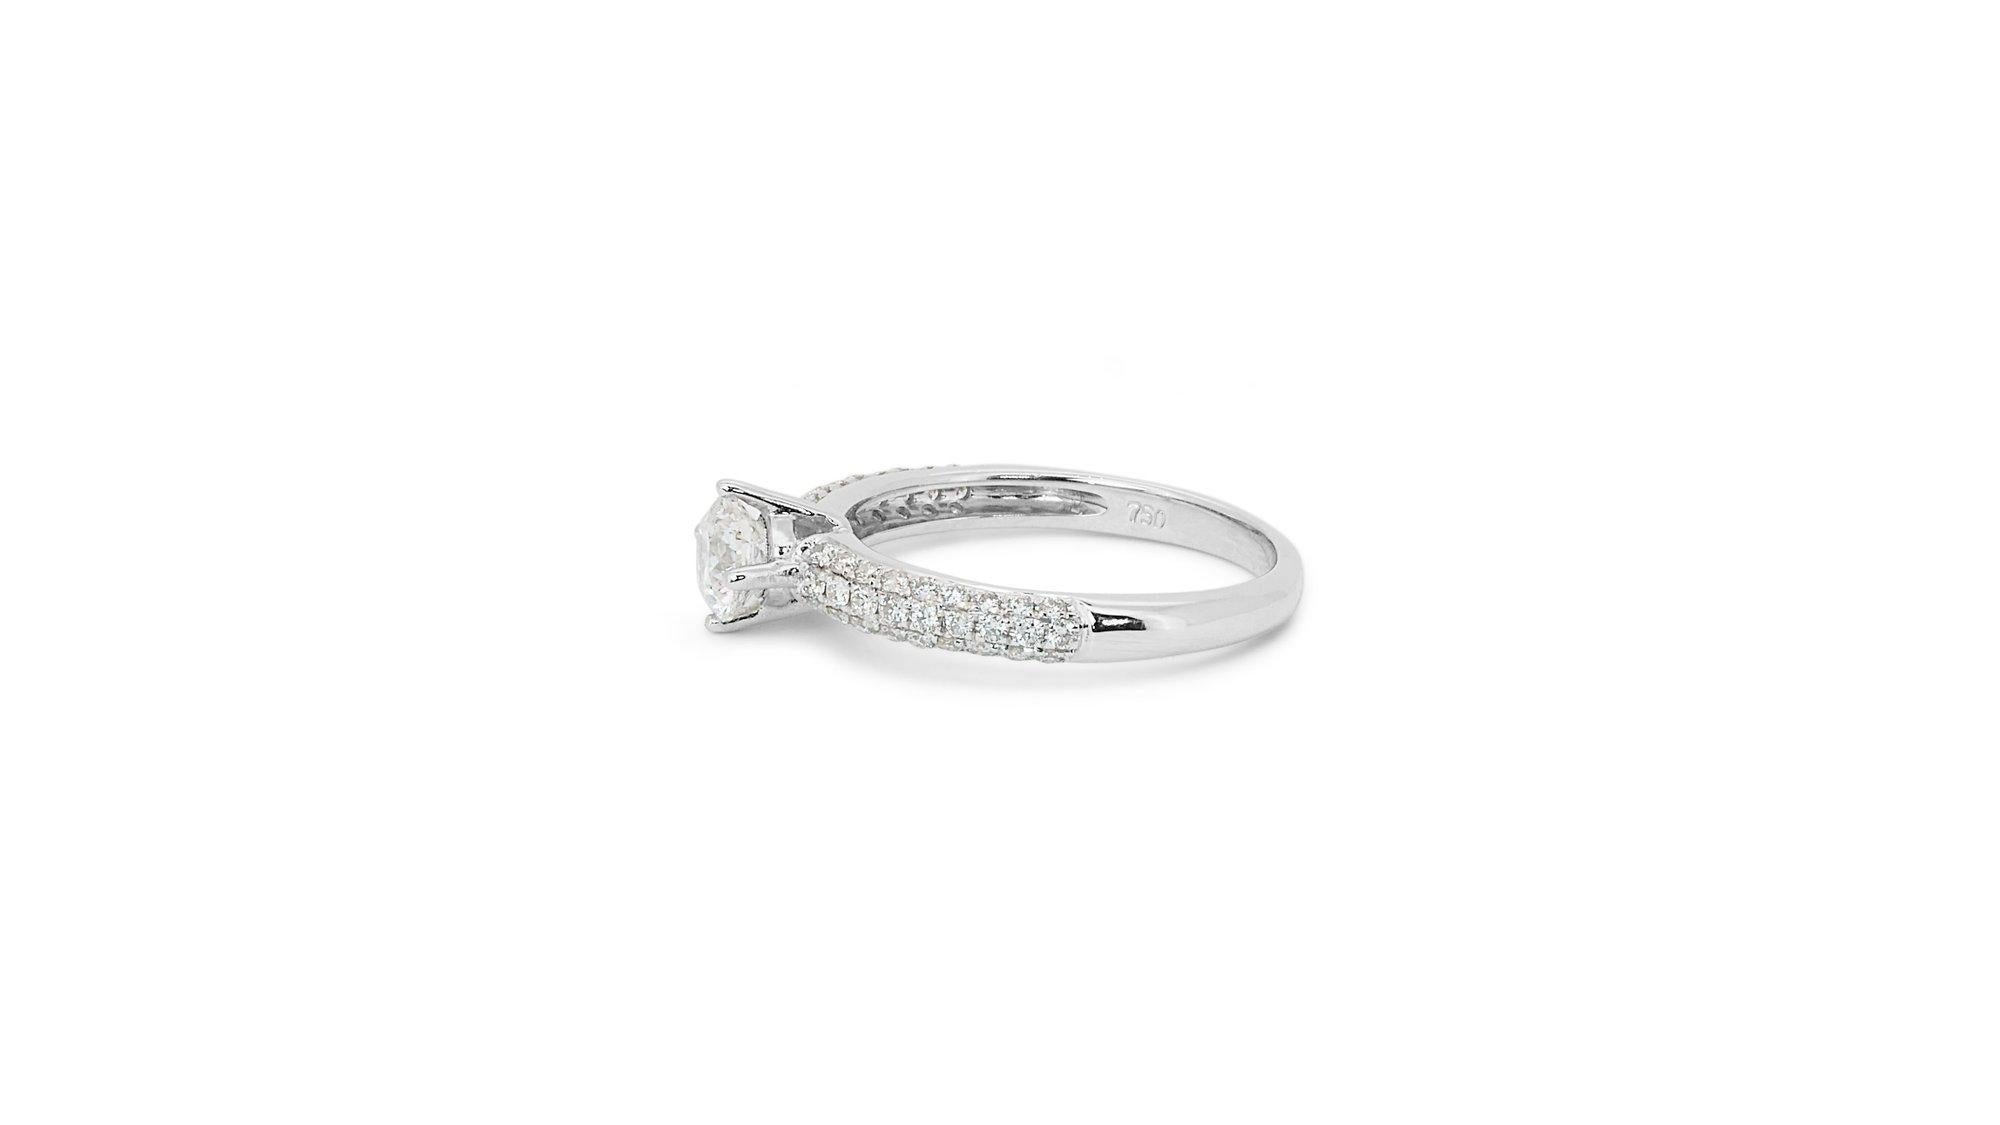 Sparkling 18k White Gold Engagement Ring with 0.90 ct Natural Diamonds IGI Cert 2